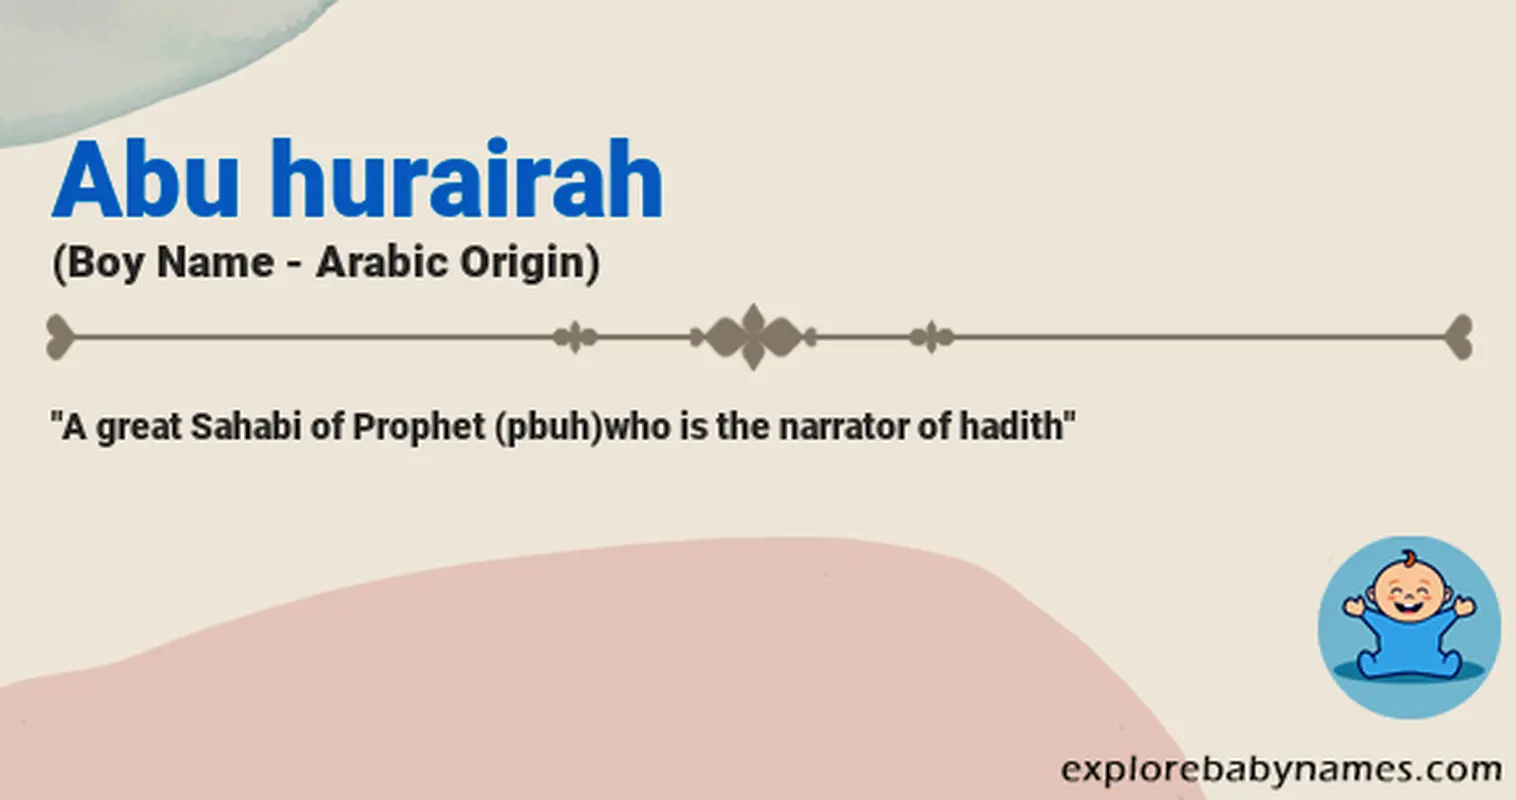 Meaning of Abu hurairah